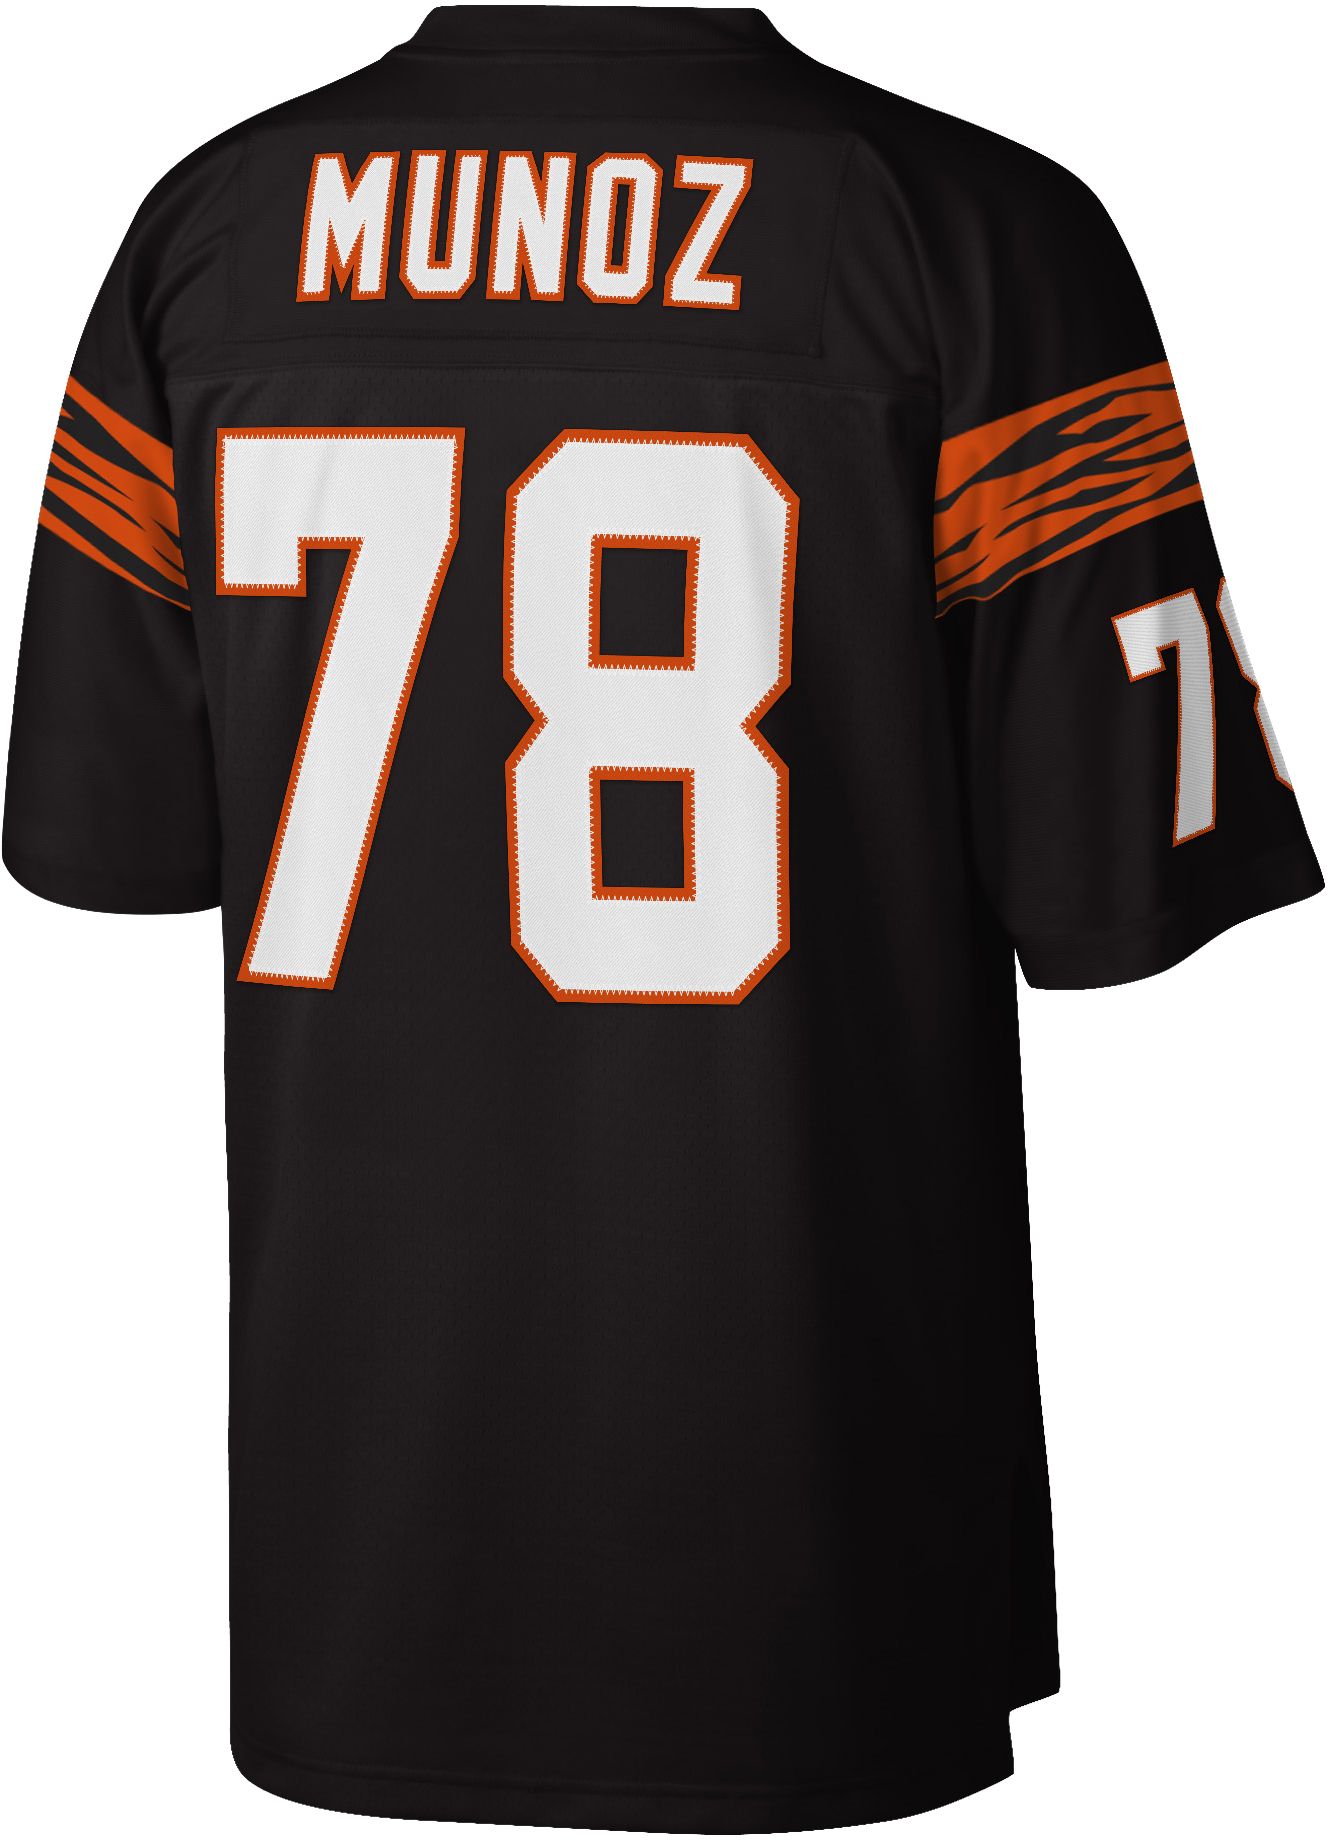 Anthony Munoz Hall of Fame jersey